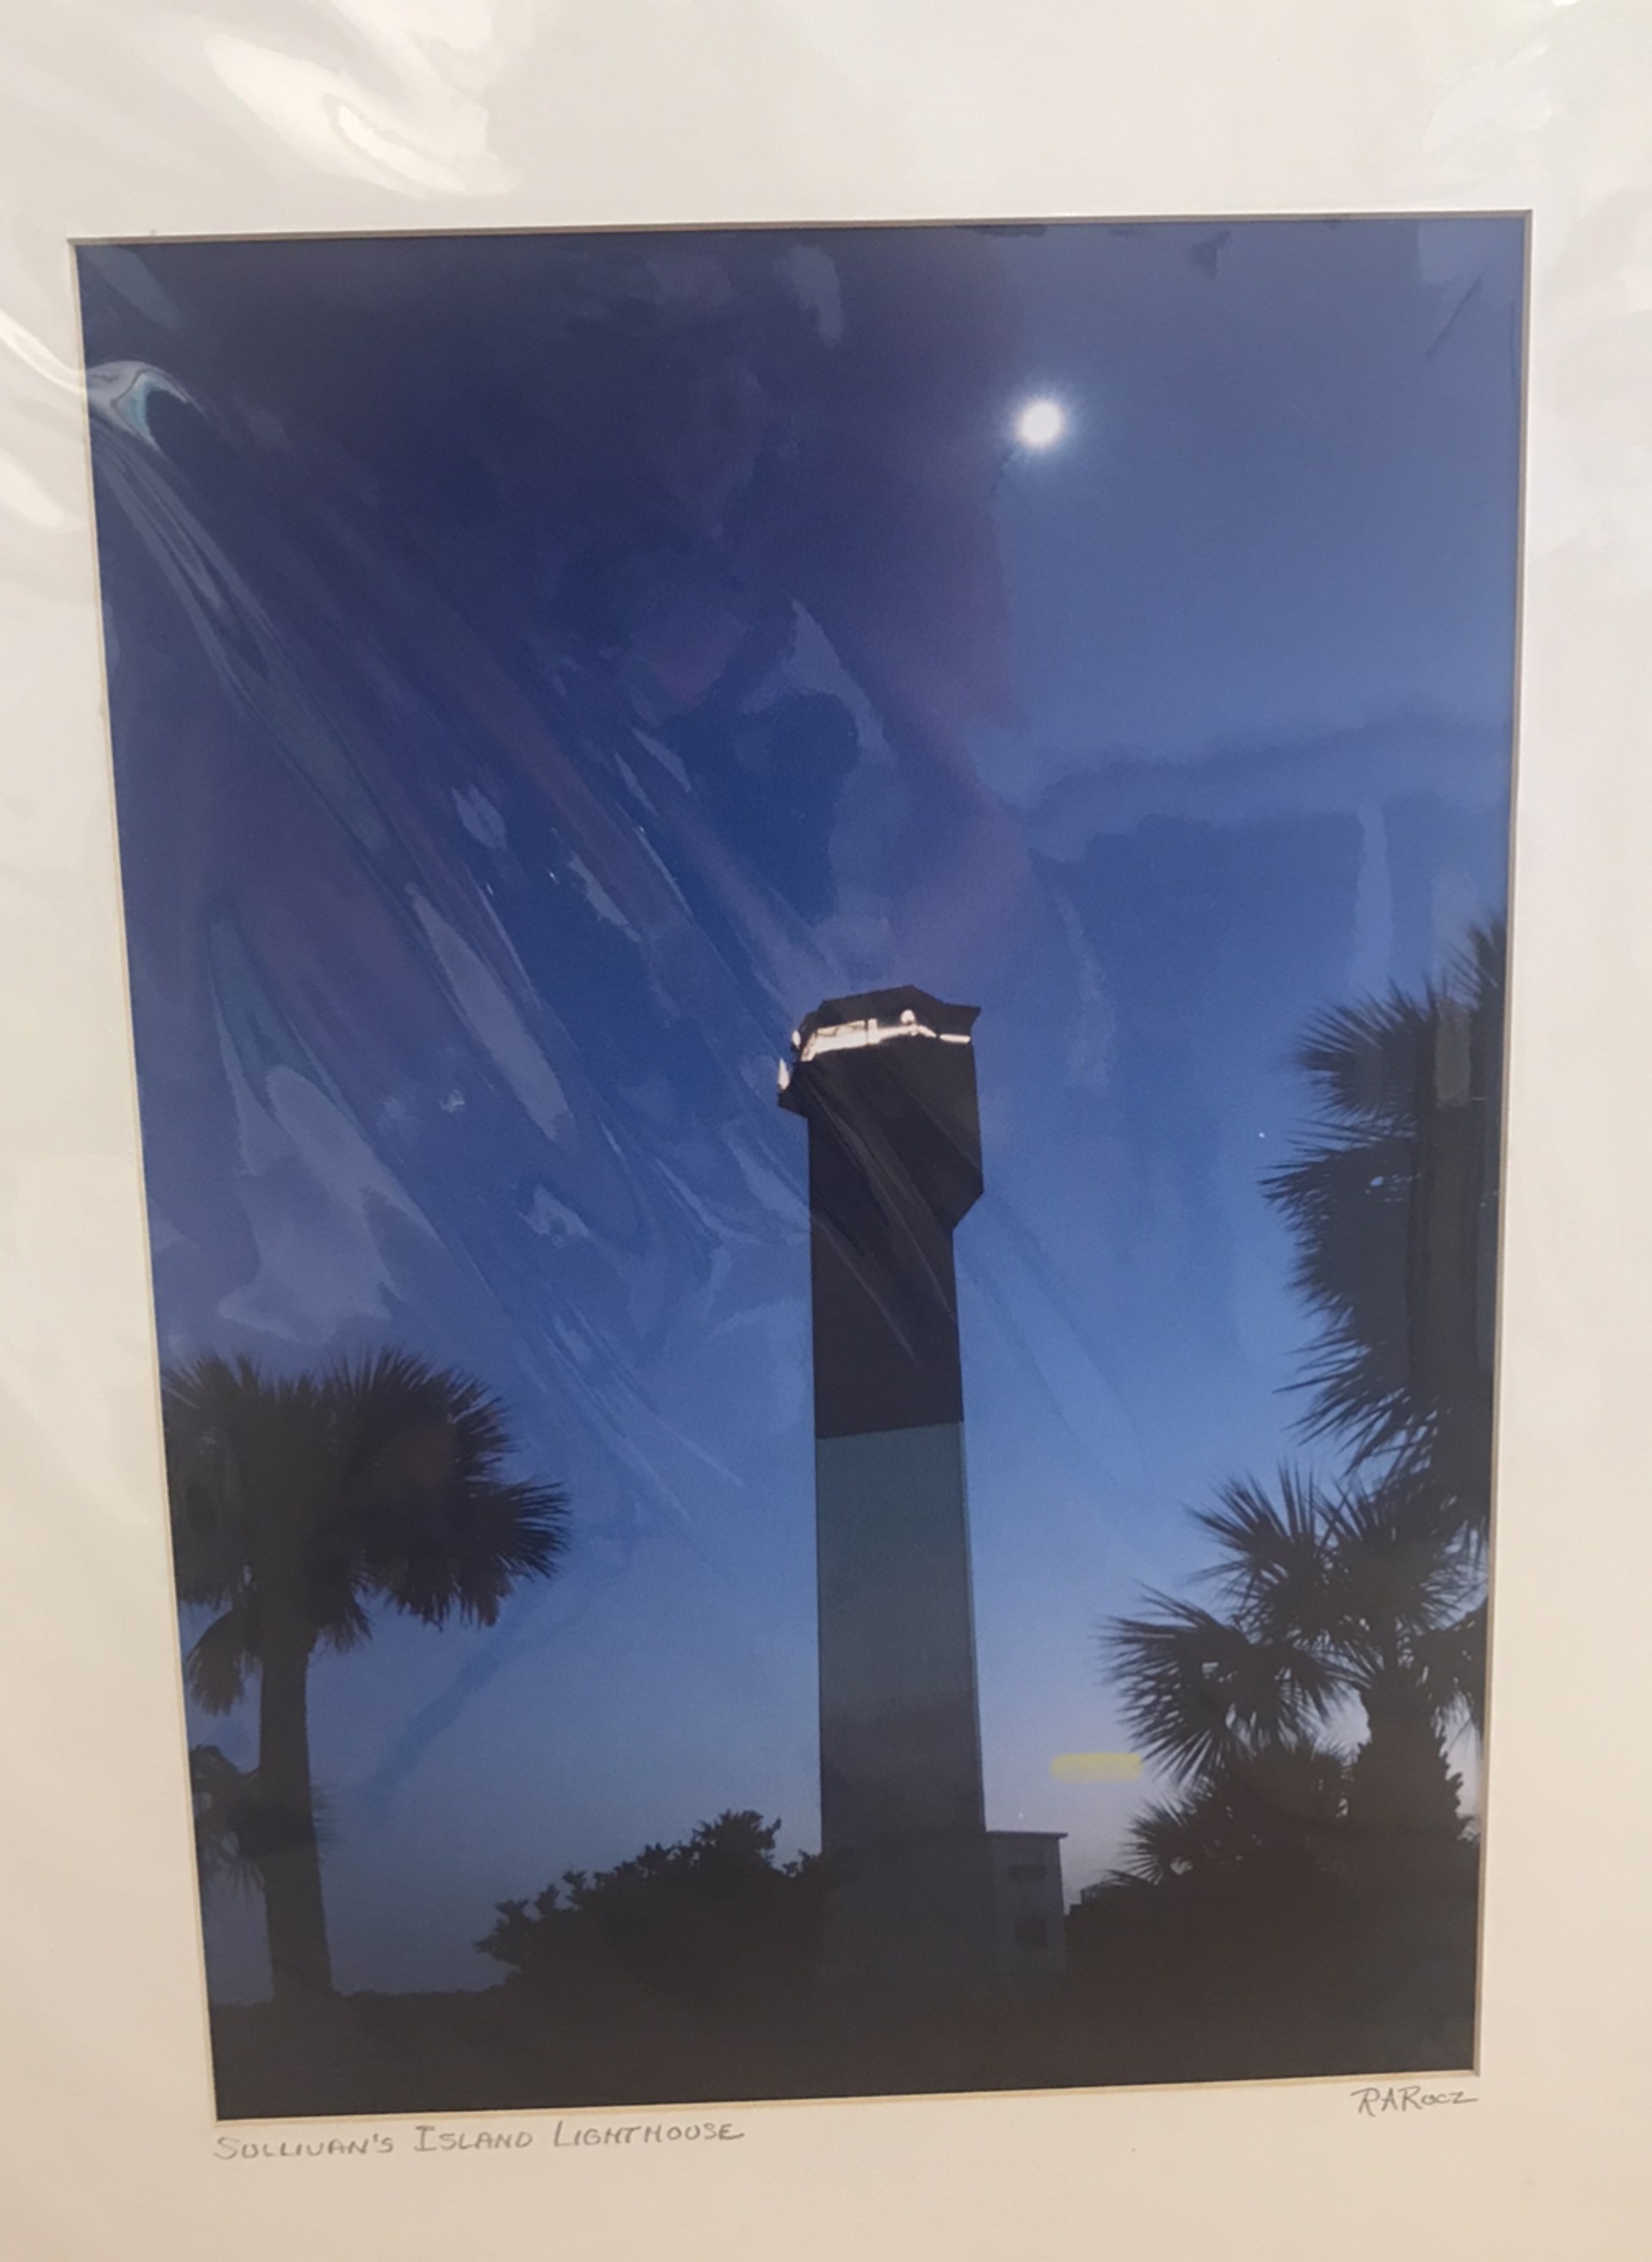 Sullivan's Island Lighthouse by Ron Rocz